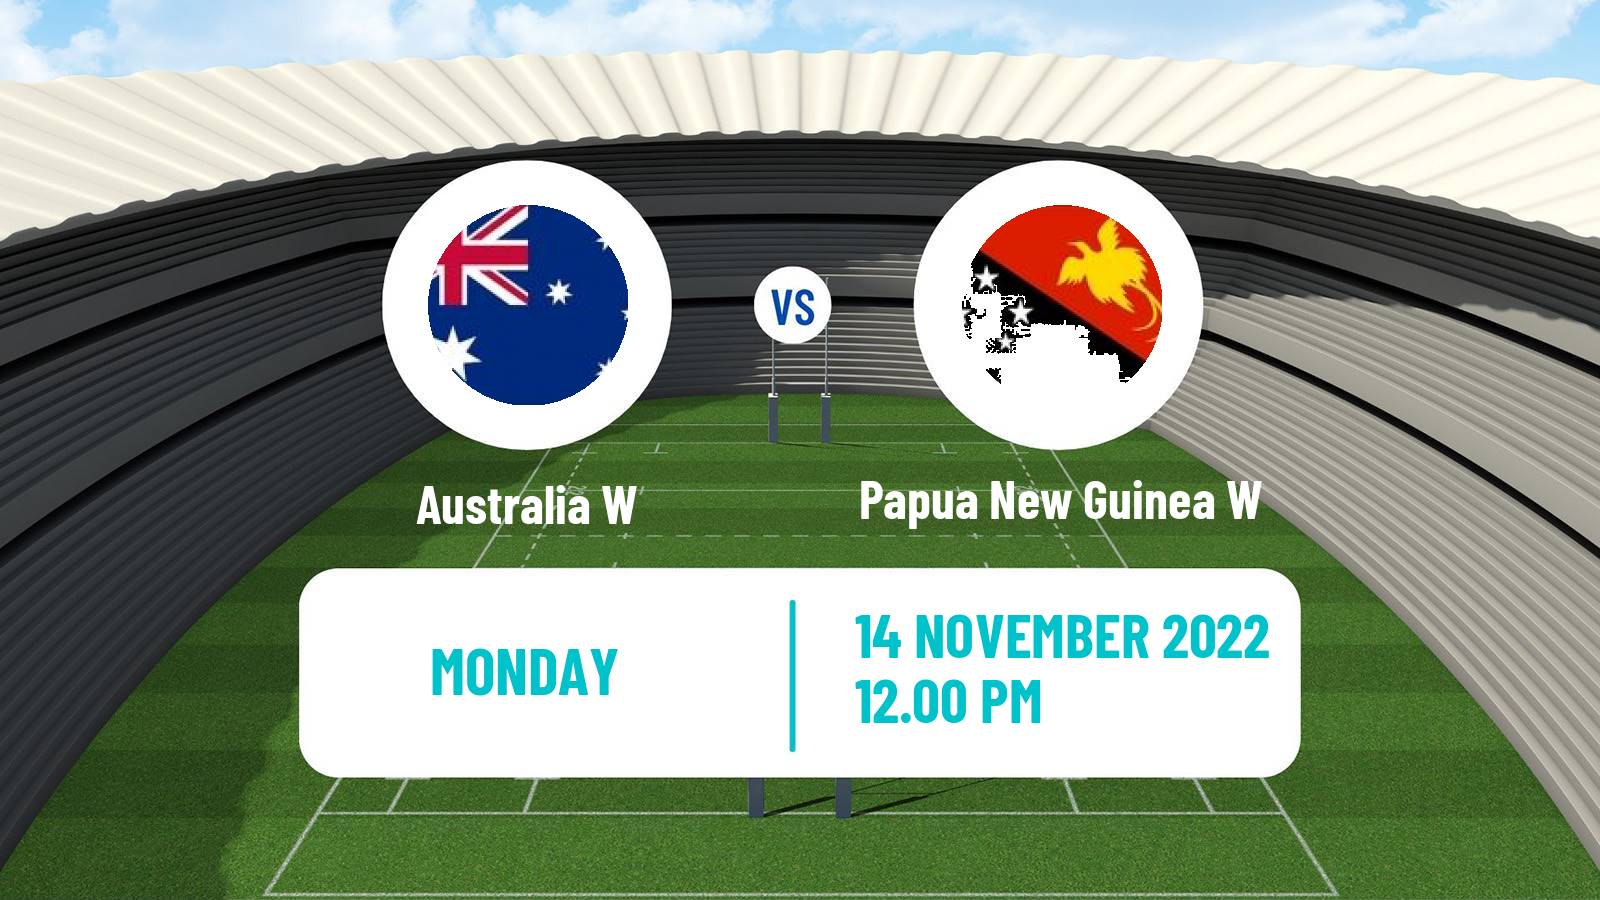 Rugby league World Cup Rugby League Women Australia W - Papua New Guinea W